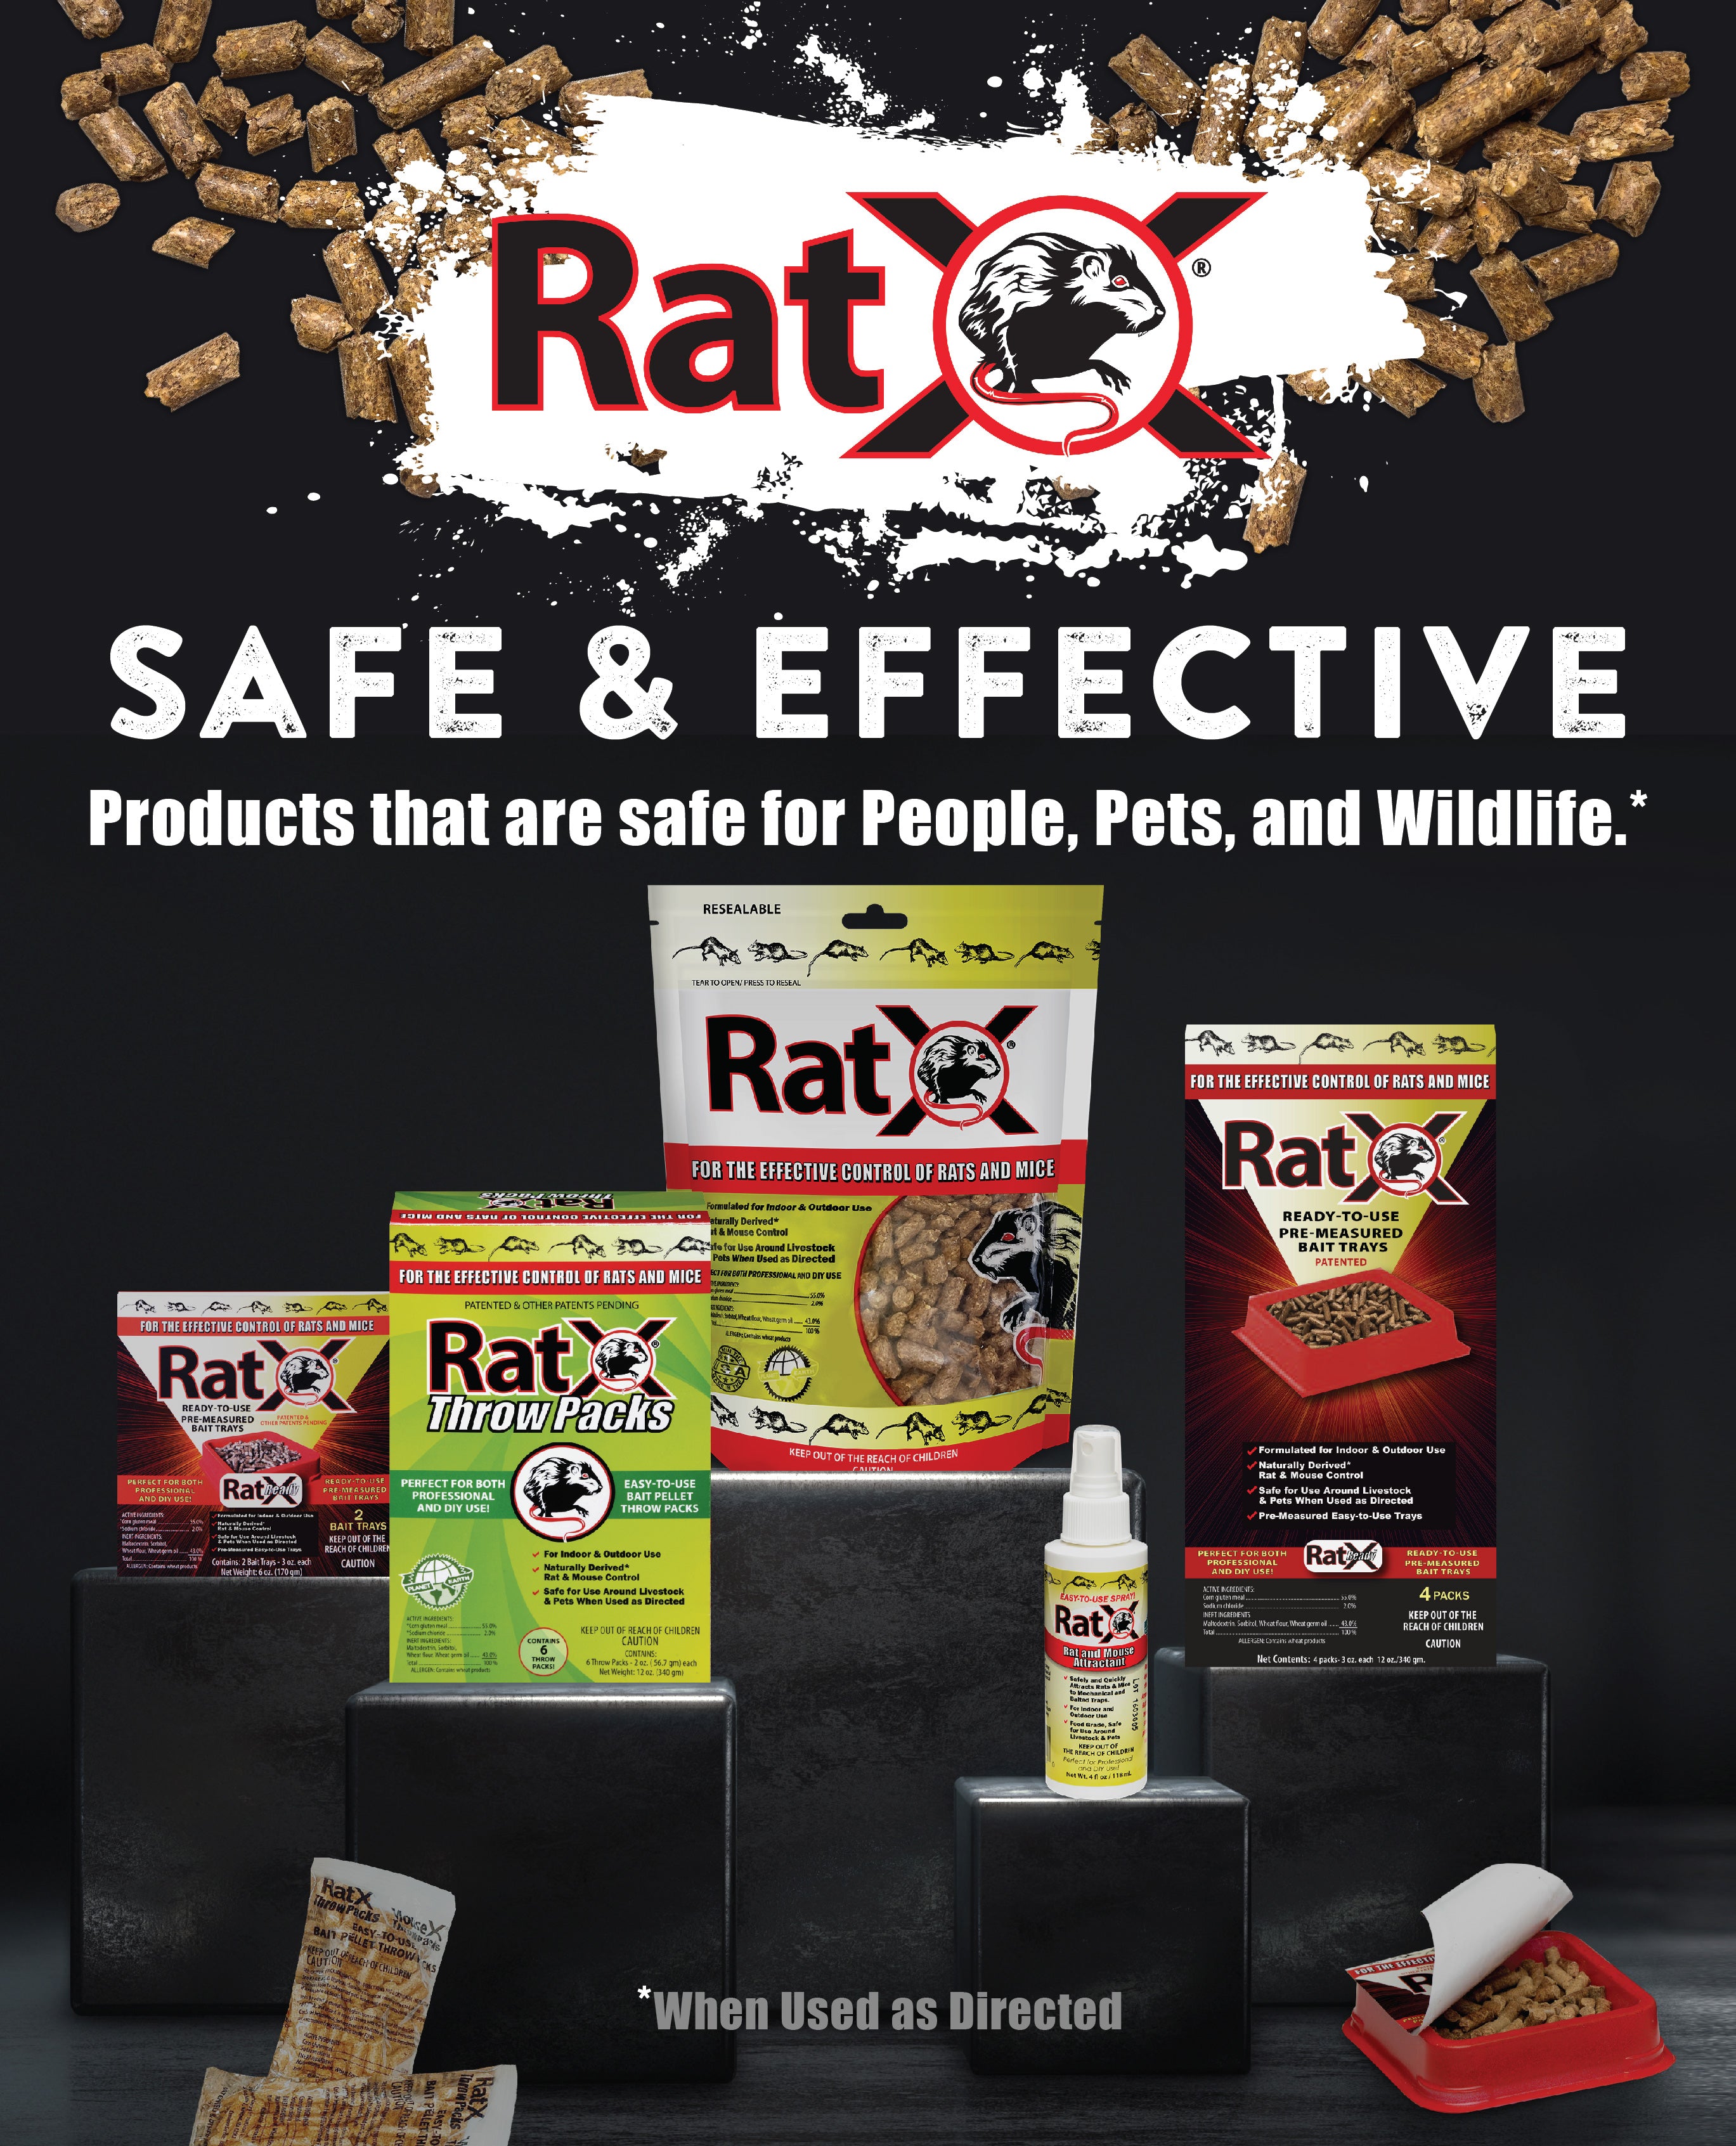 RatX® Ready Trays